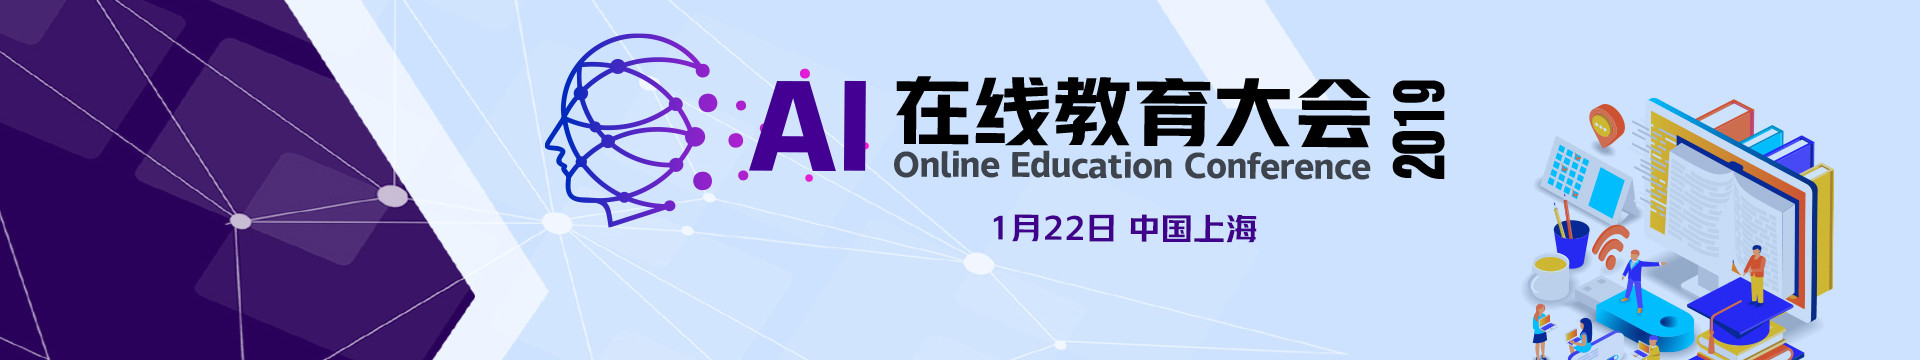 AI在线教育大会2019（上海）